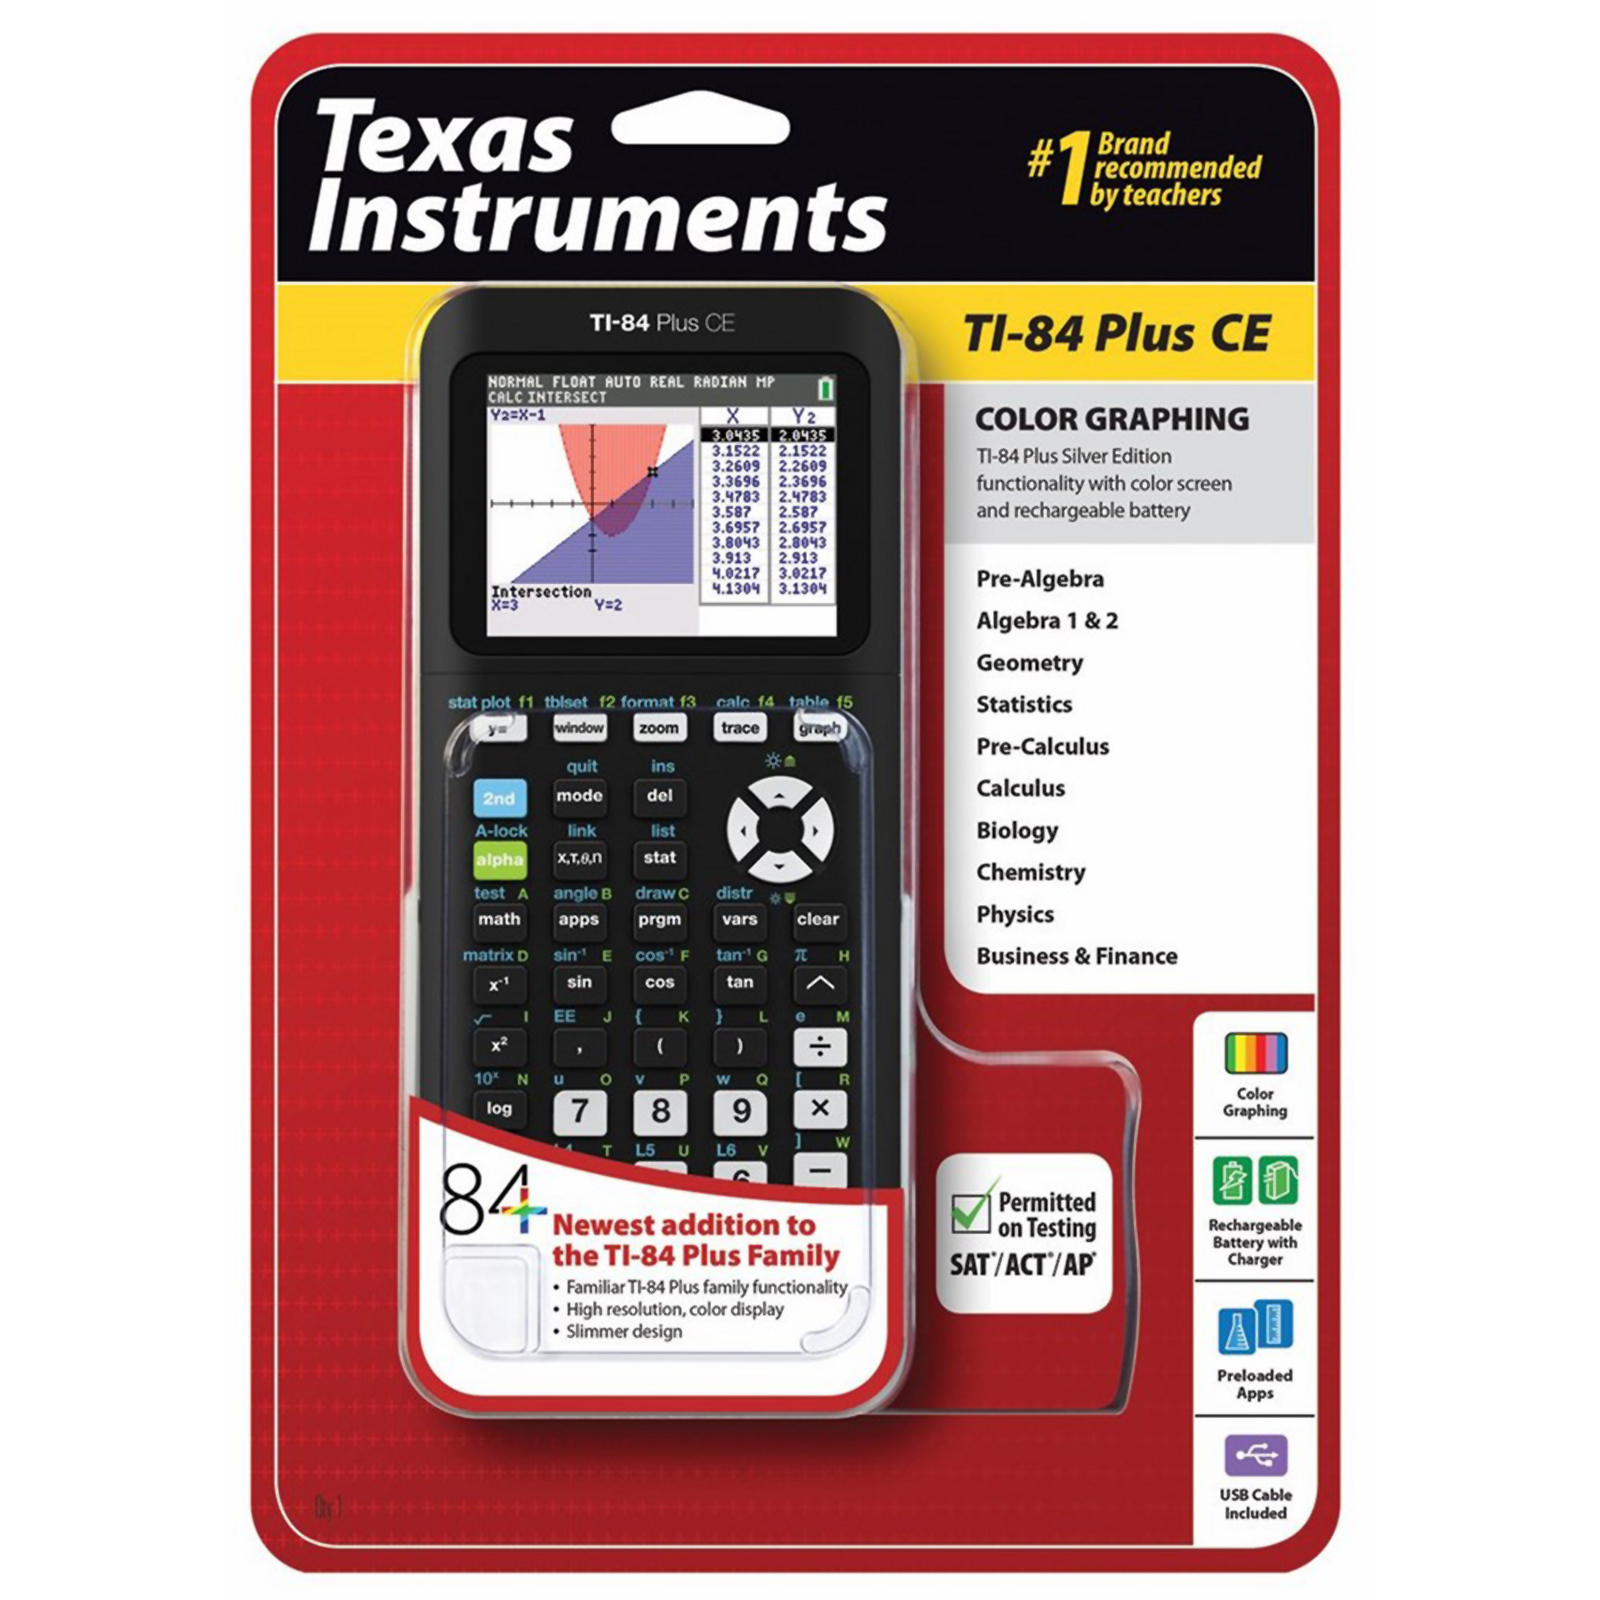 Texas Instruments ZIDTFYYWQA TI-84 Plus CE Graphing Calculator - Black